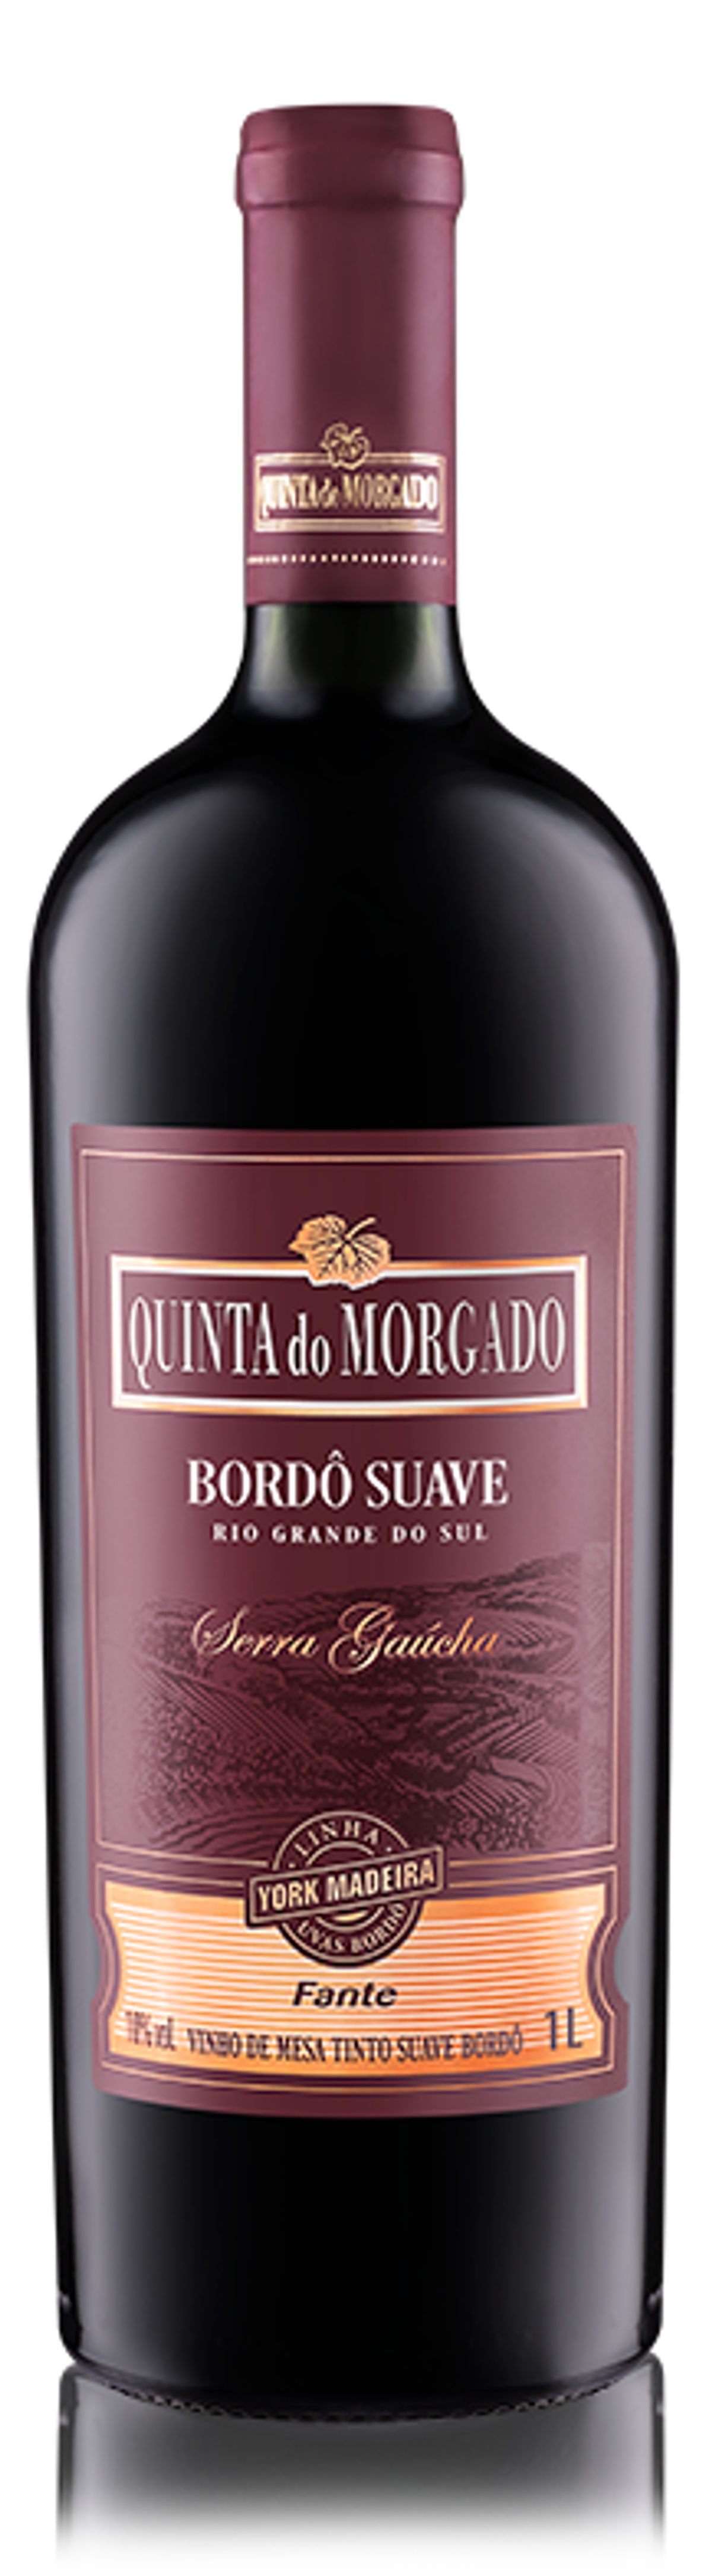 Vinho Brasileiro Tinto Suave Quinta do Morgado Bordô Serra Gaúcha Garrafa 1l